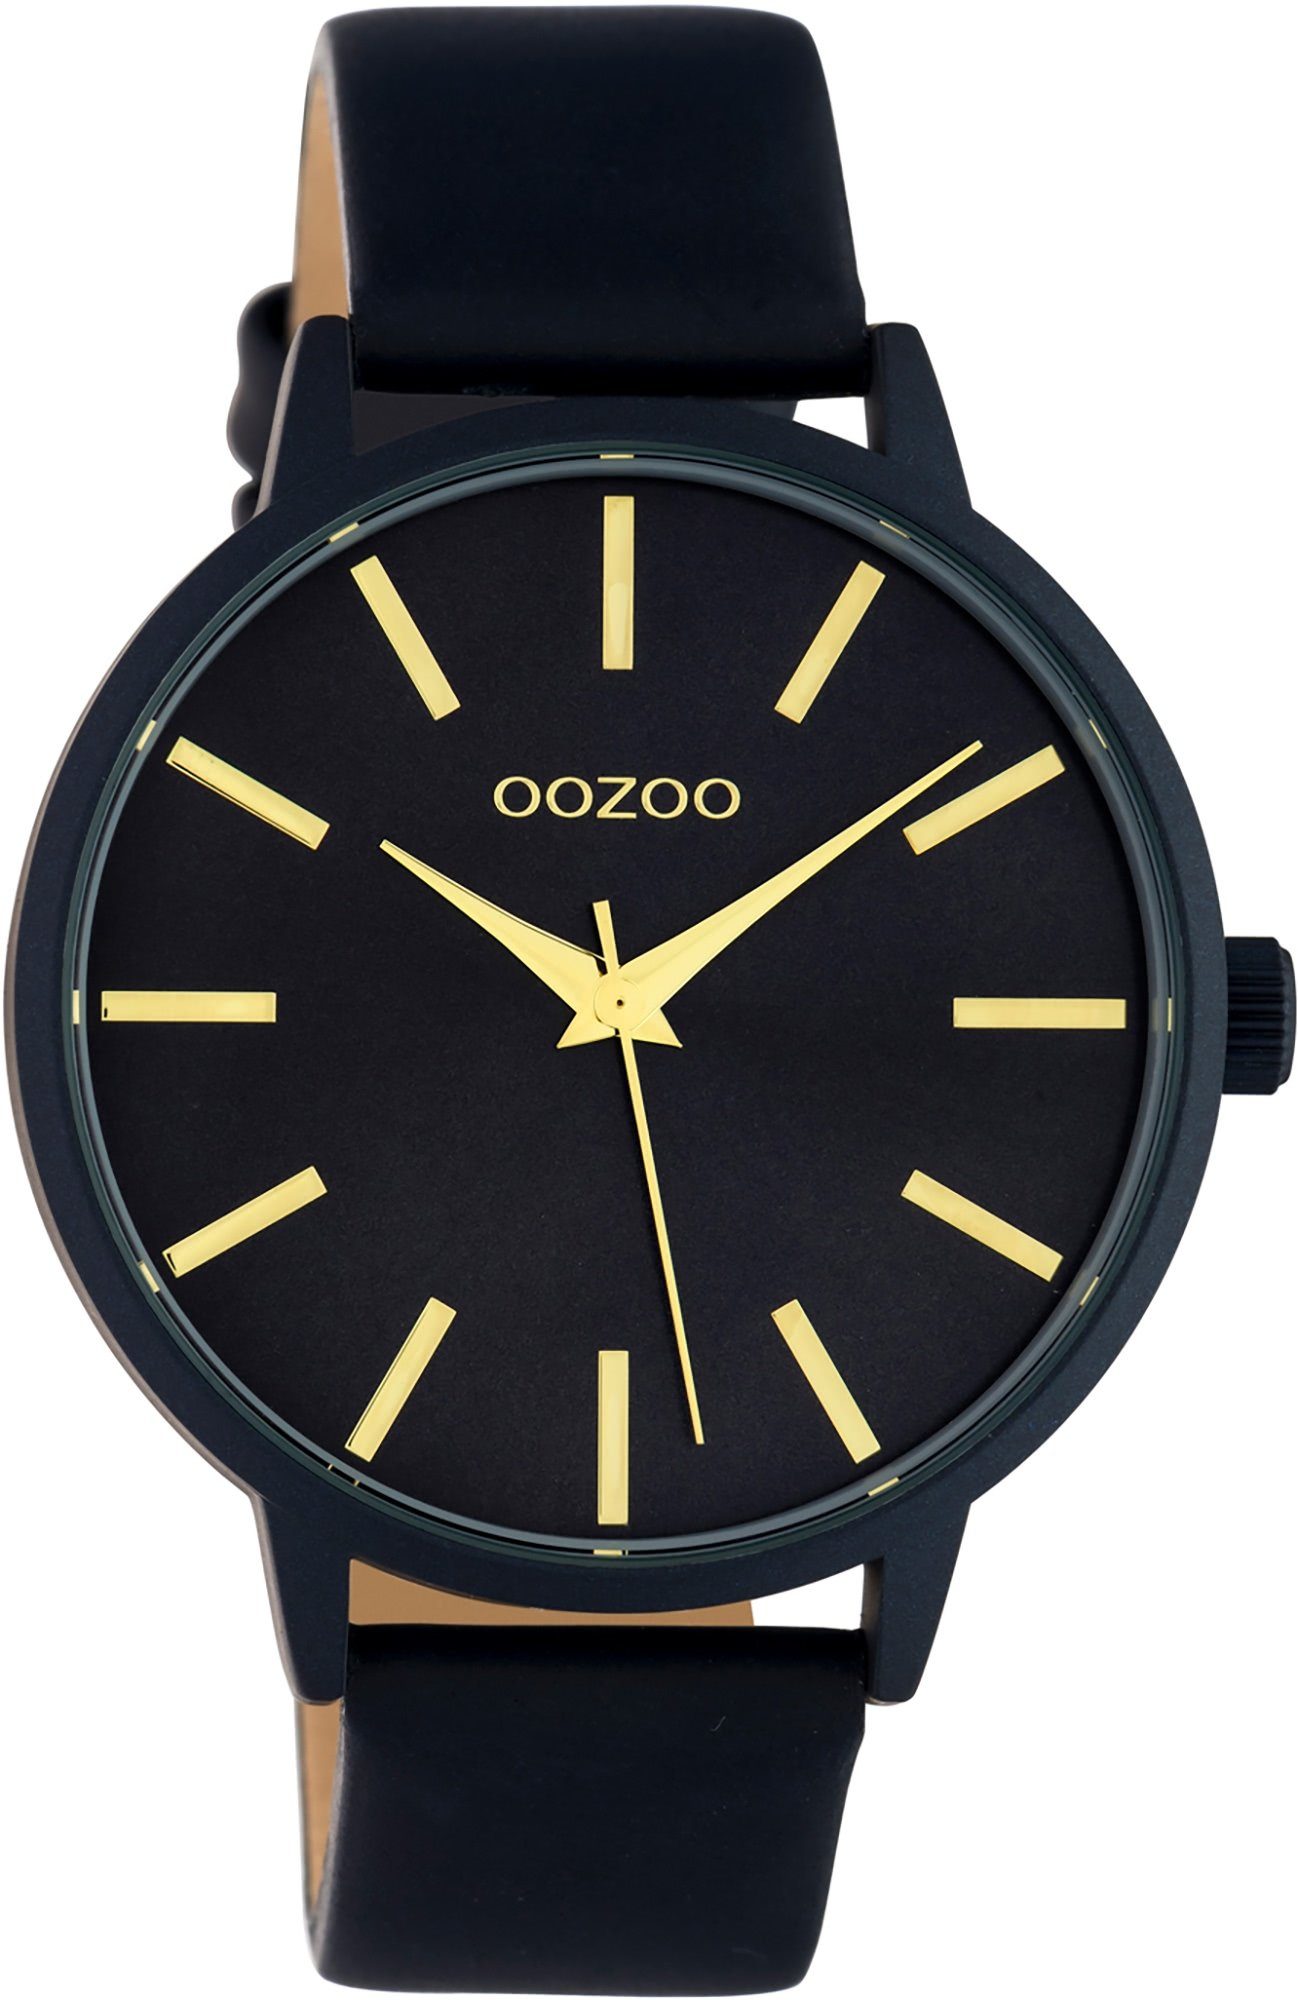 OOZOO Quarzuhr Oozoo (ca. Lederarmband, Analog, Damen Fashion-Style Damenuhr Armbanduhr groß dunkelblau rund, 42mm)